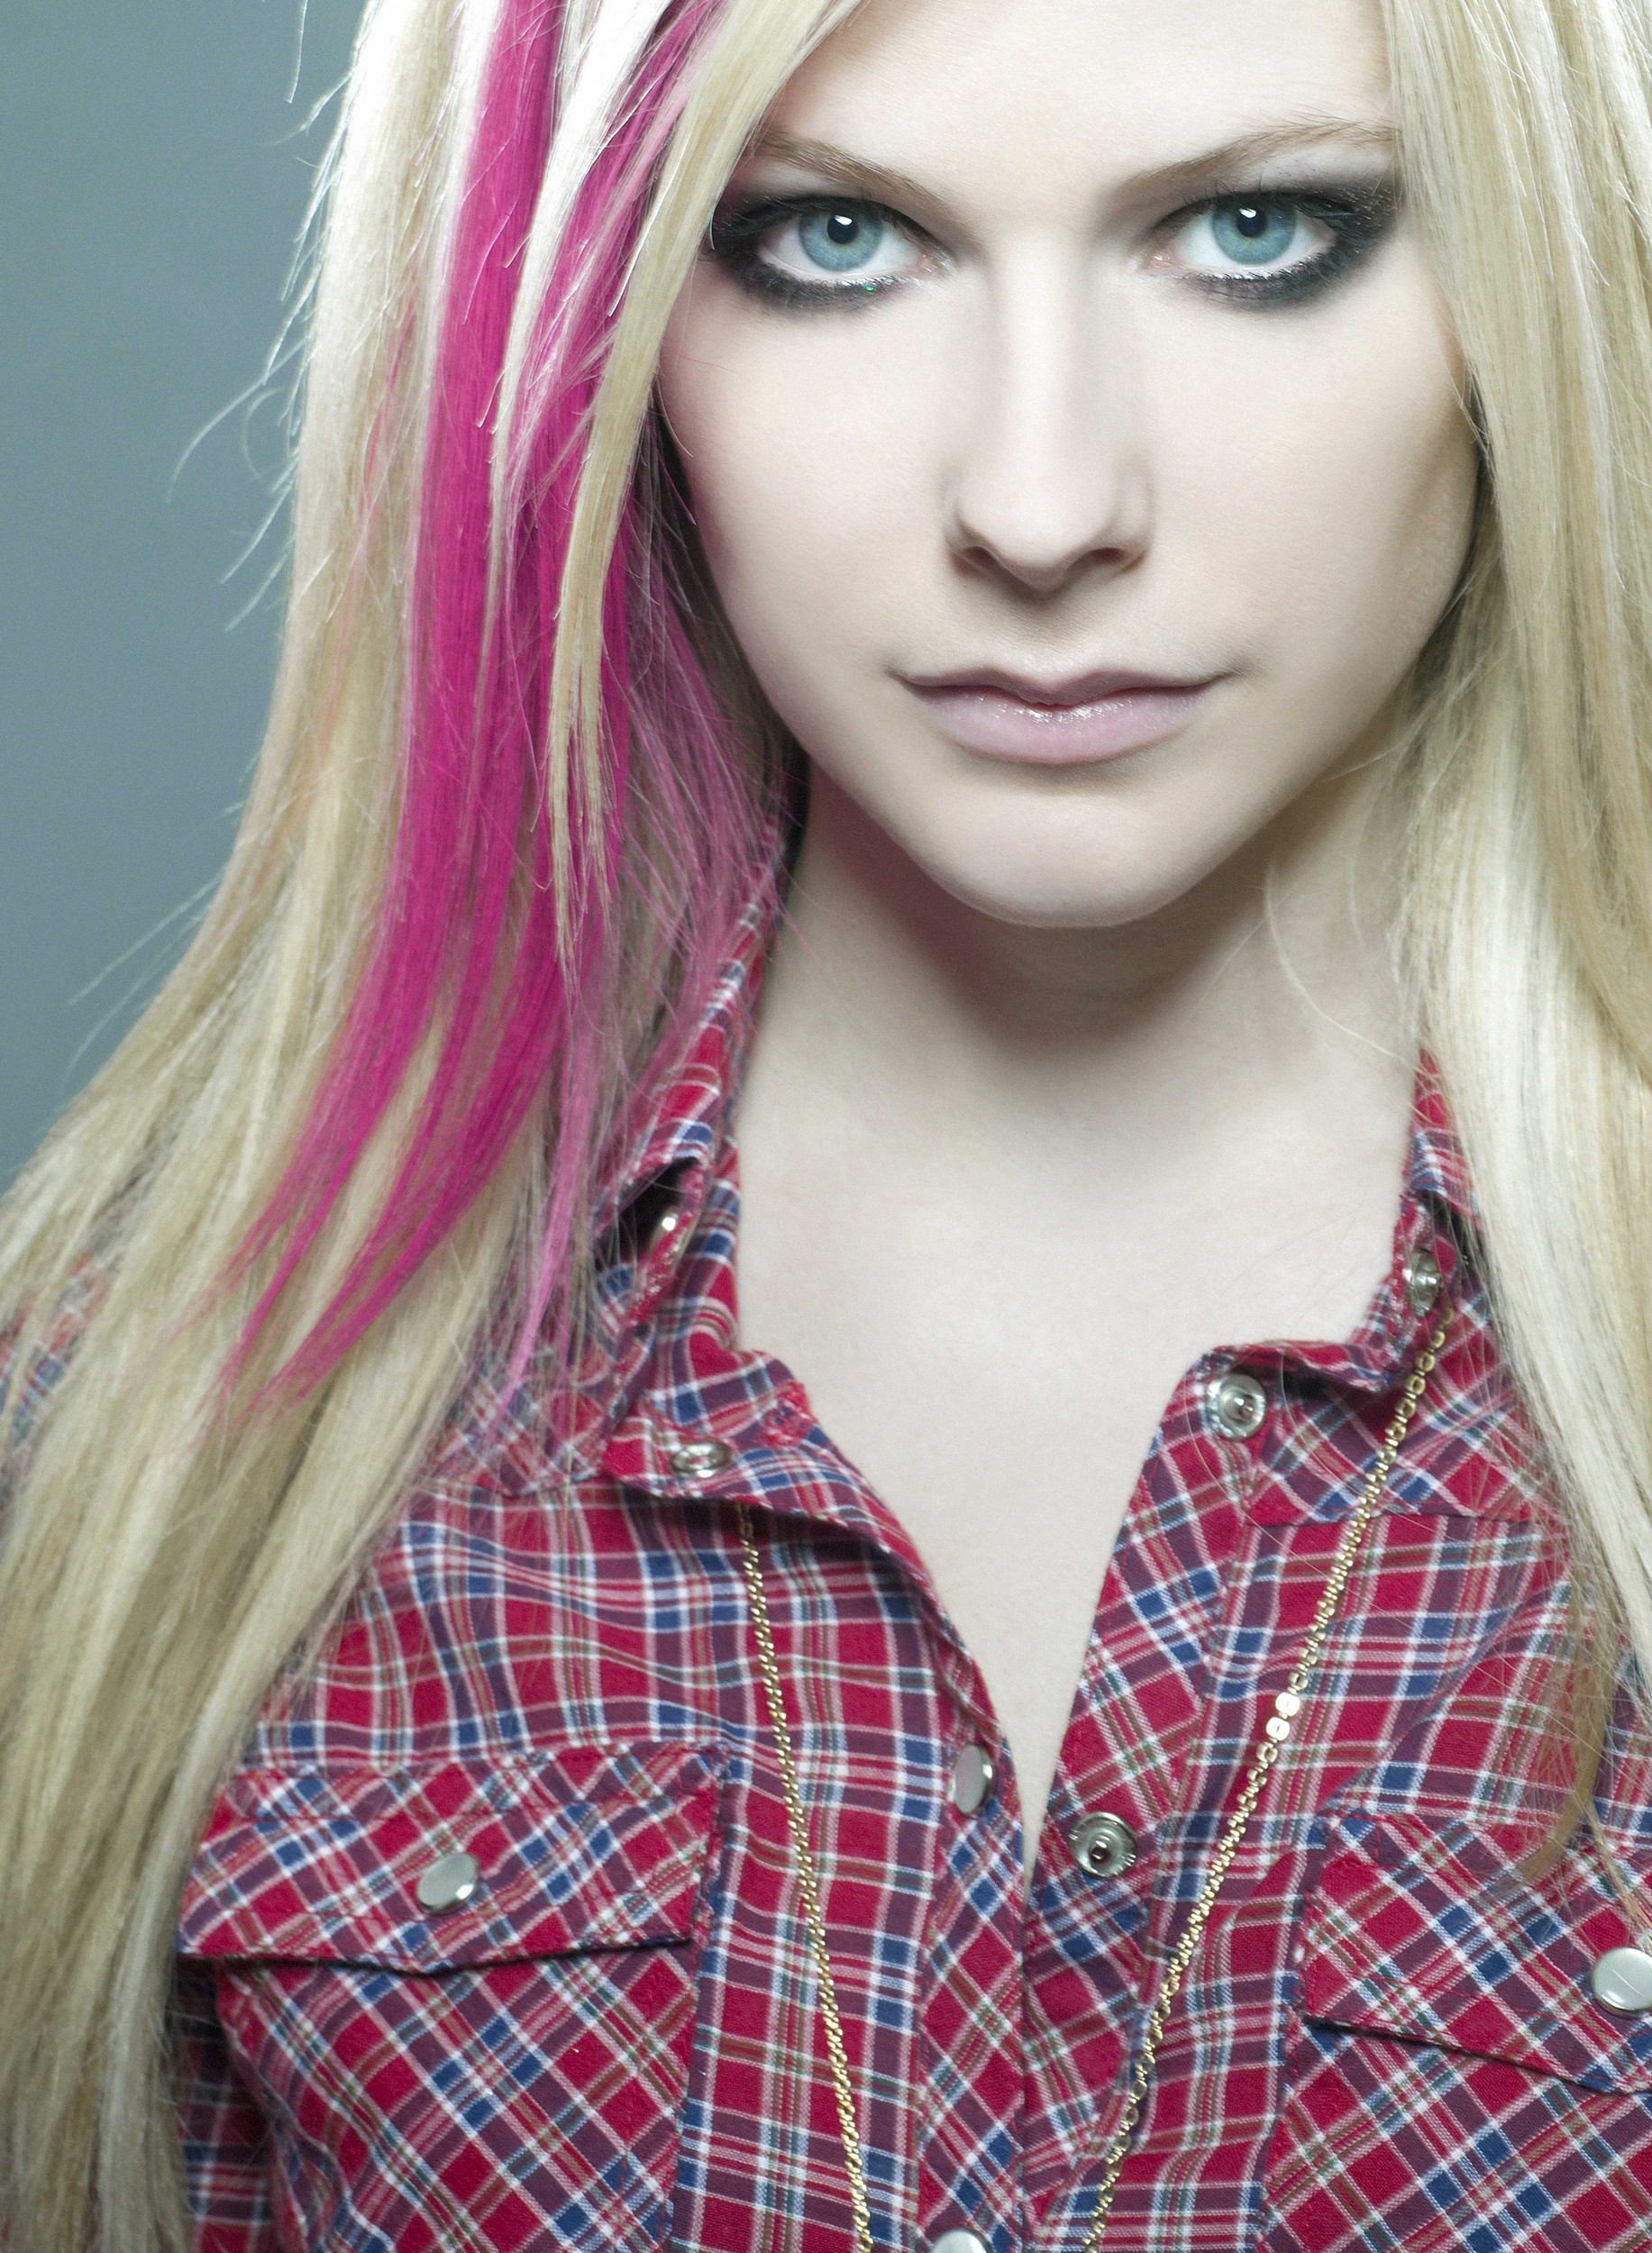 Avril Lavigne Lovely Pink streaks, plaid shirt, simple makeup